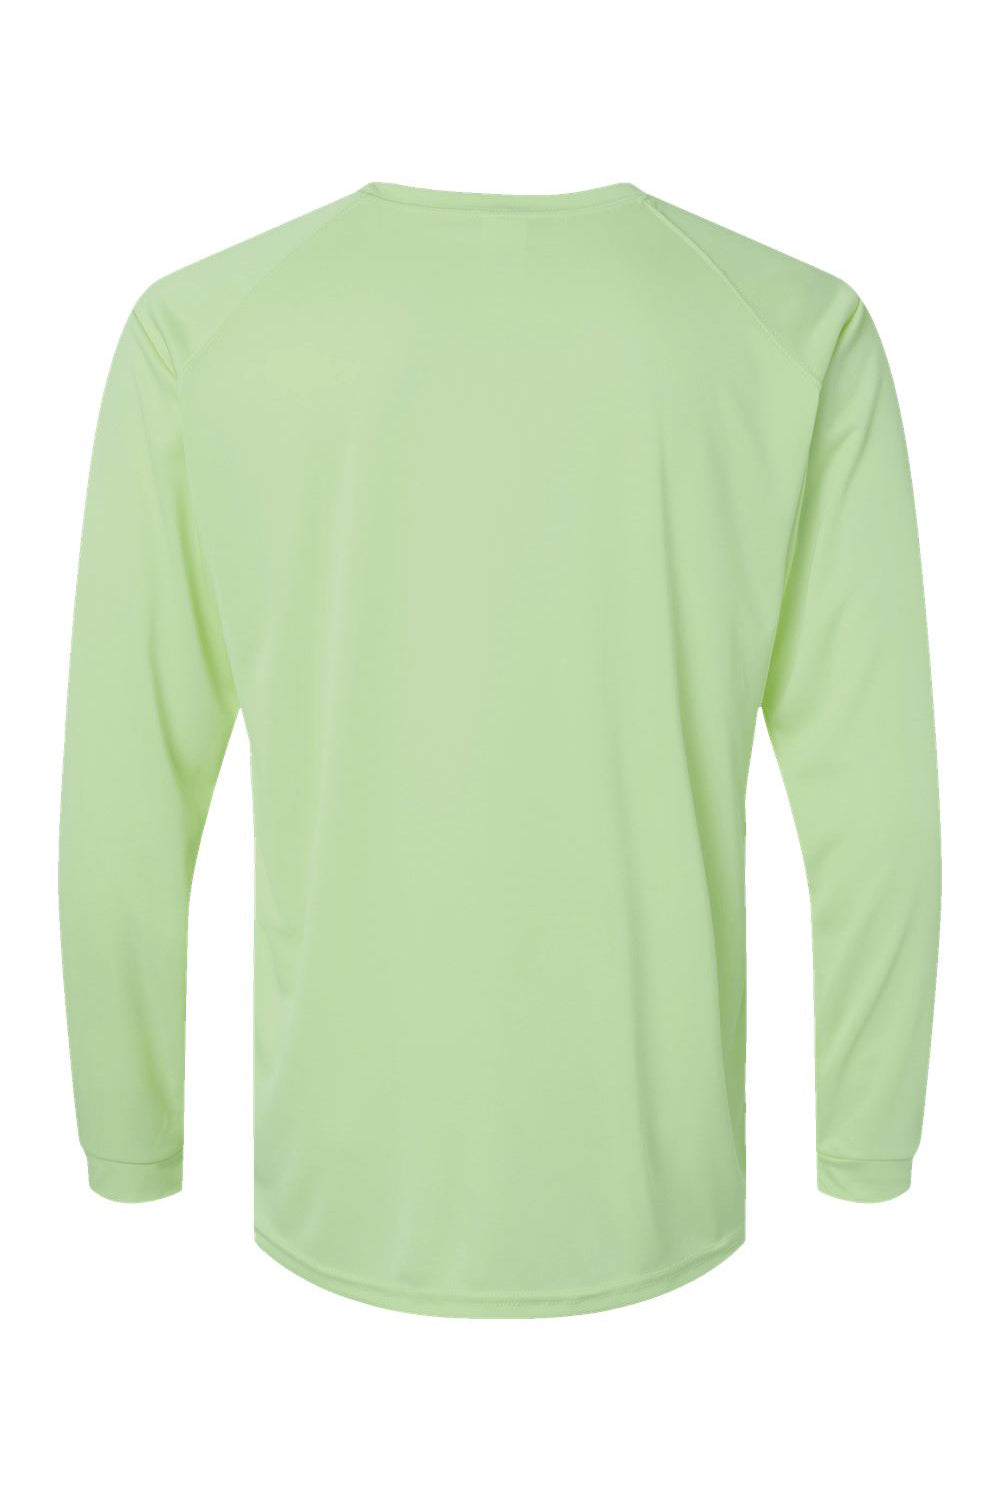 Paragon 210 Mens Islander Performance Long Sleeve Crewneck T-Shirt Limeade Green Flat Back